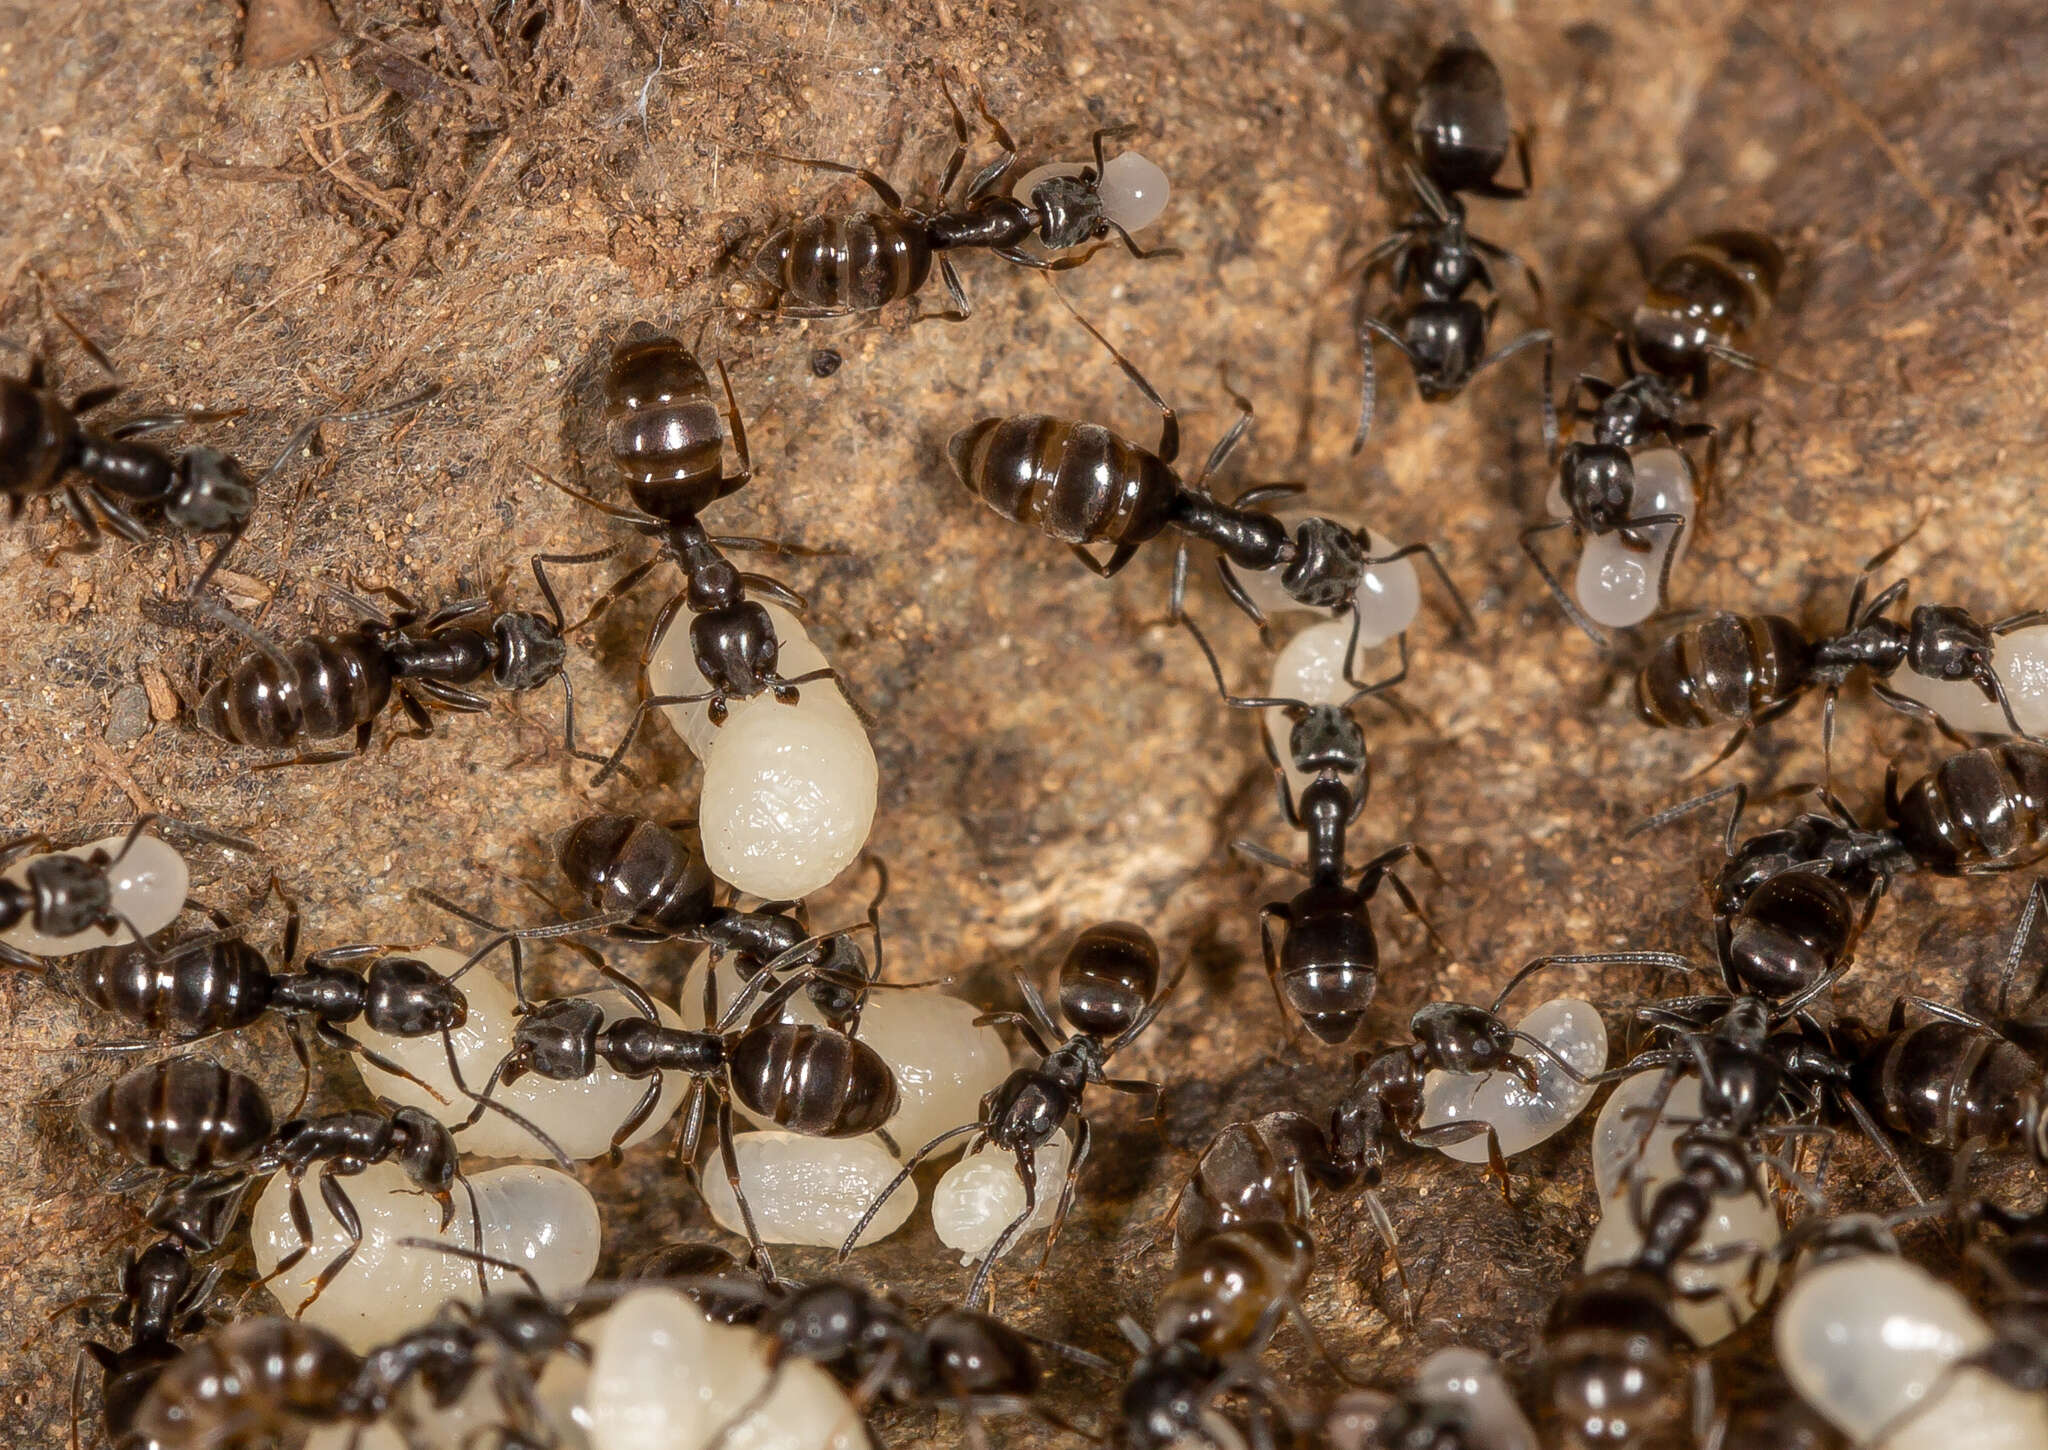 Image of Erratic ant